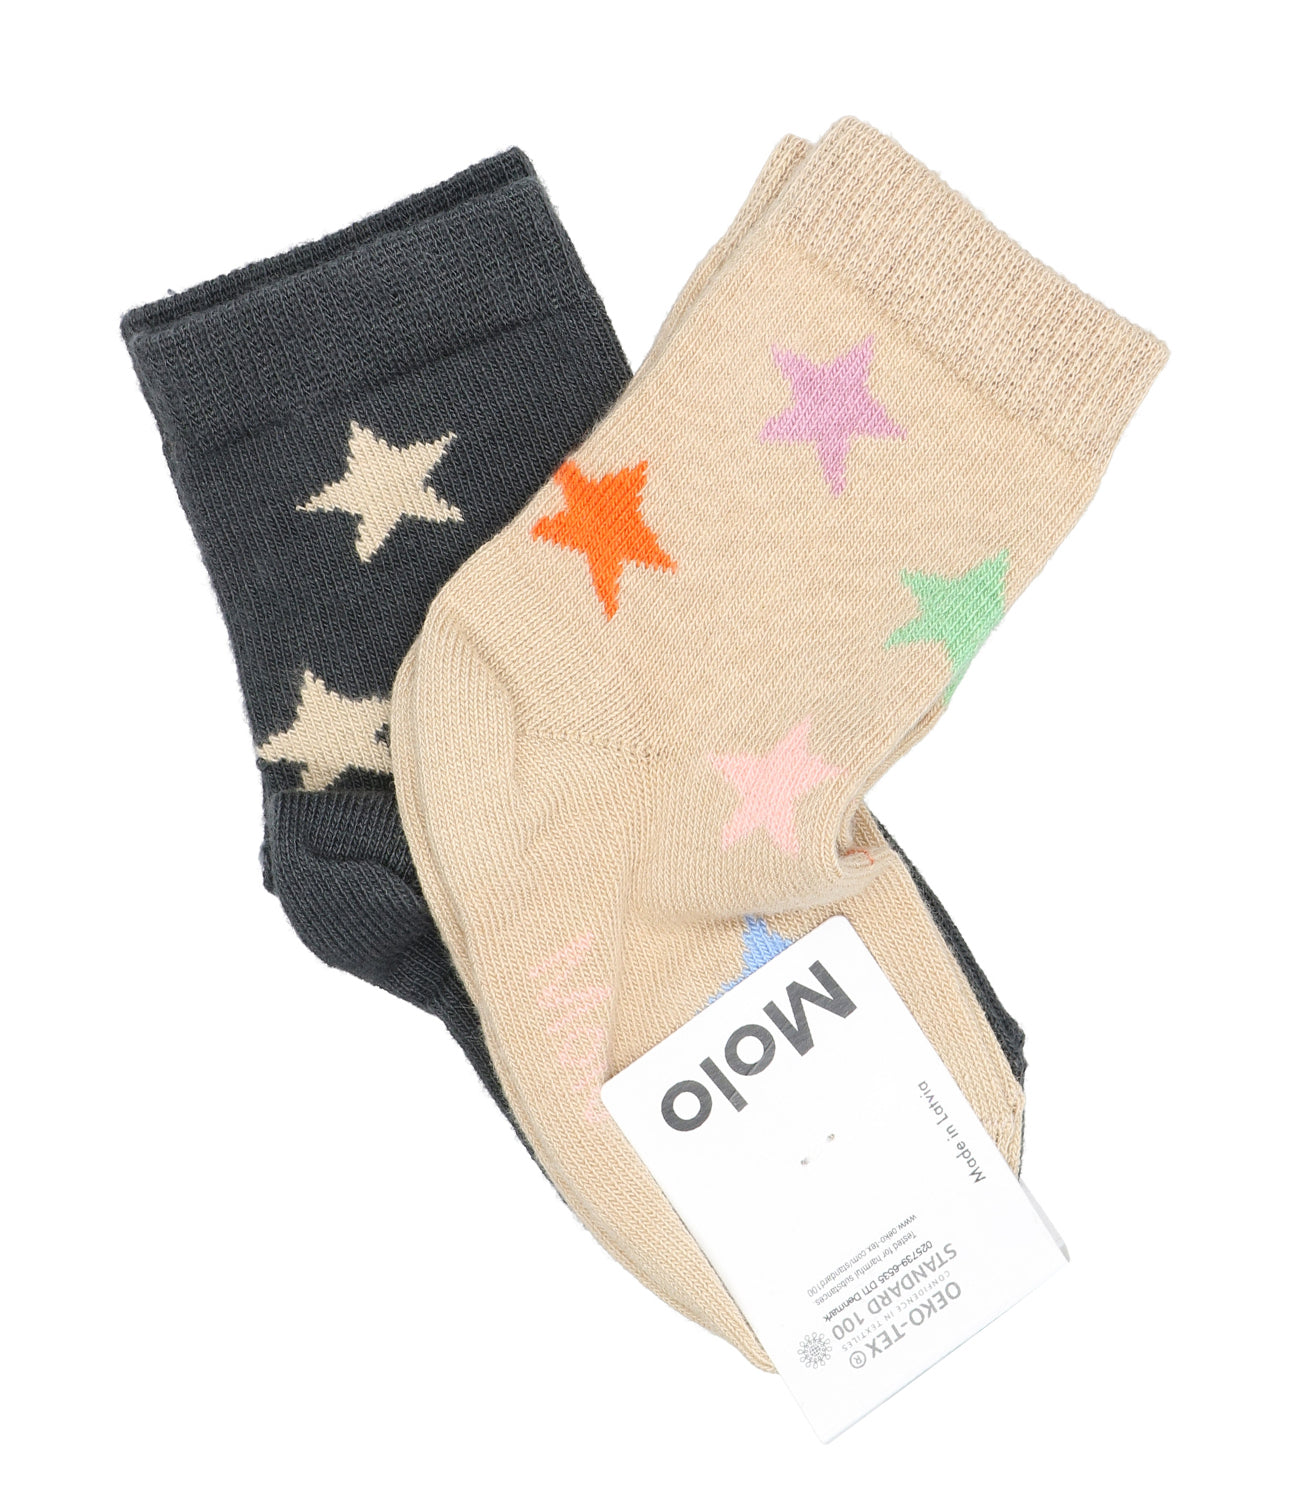 Molo | Multicolor Socks